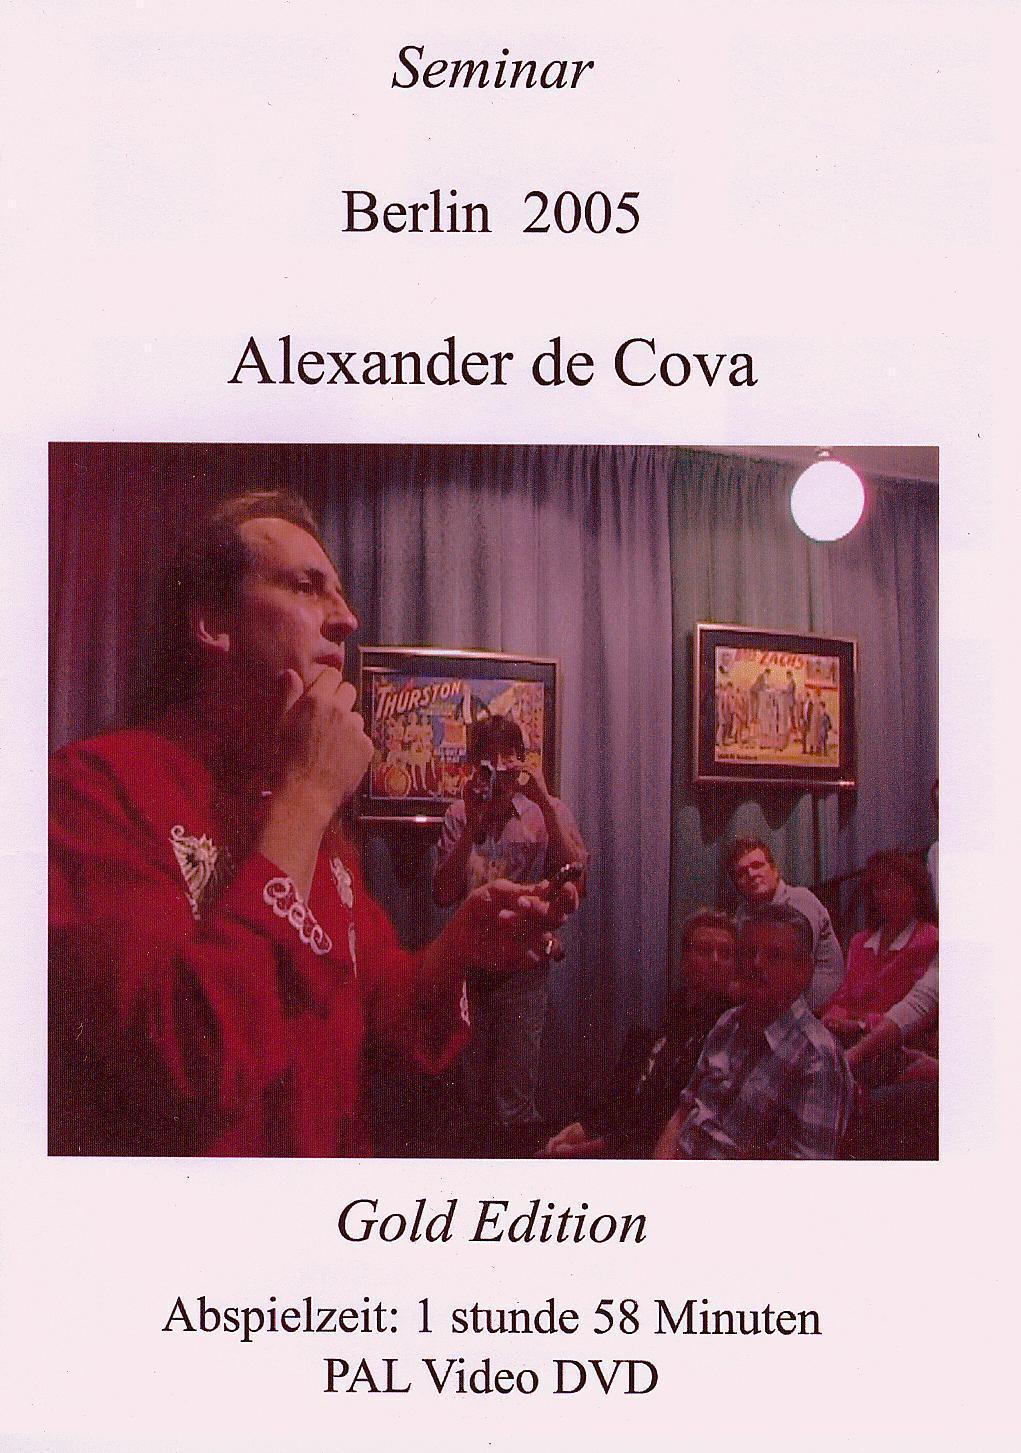 Alexander de Cova - Seminar(Berlin 2005)